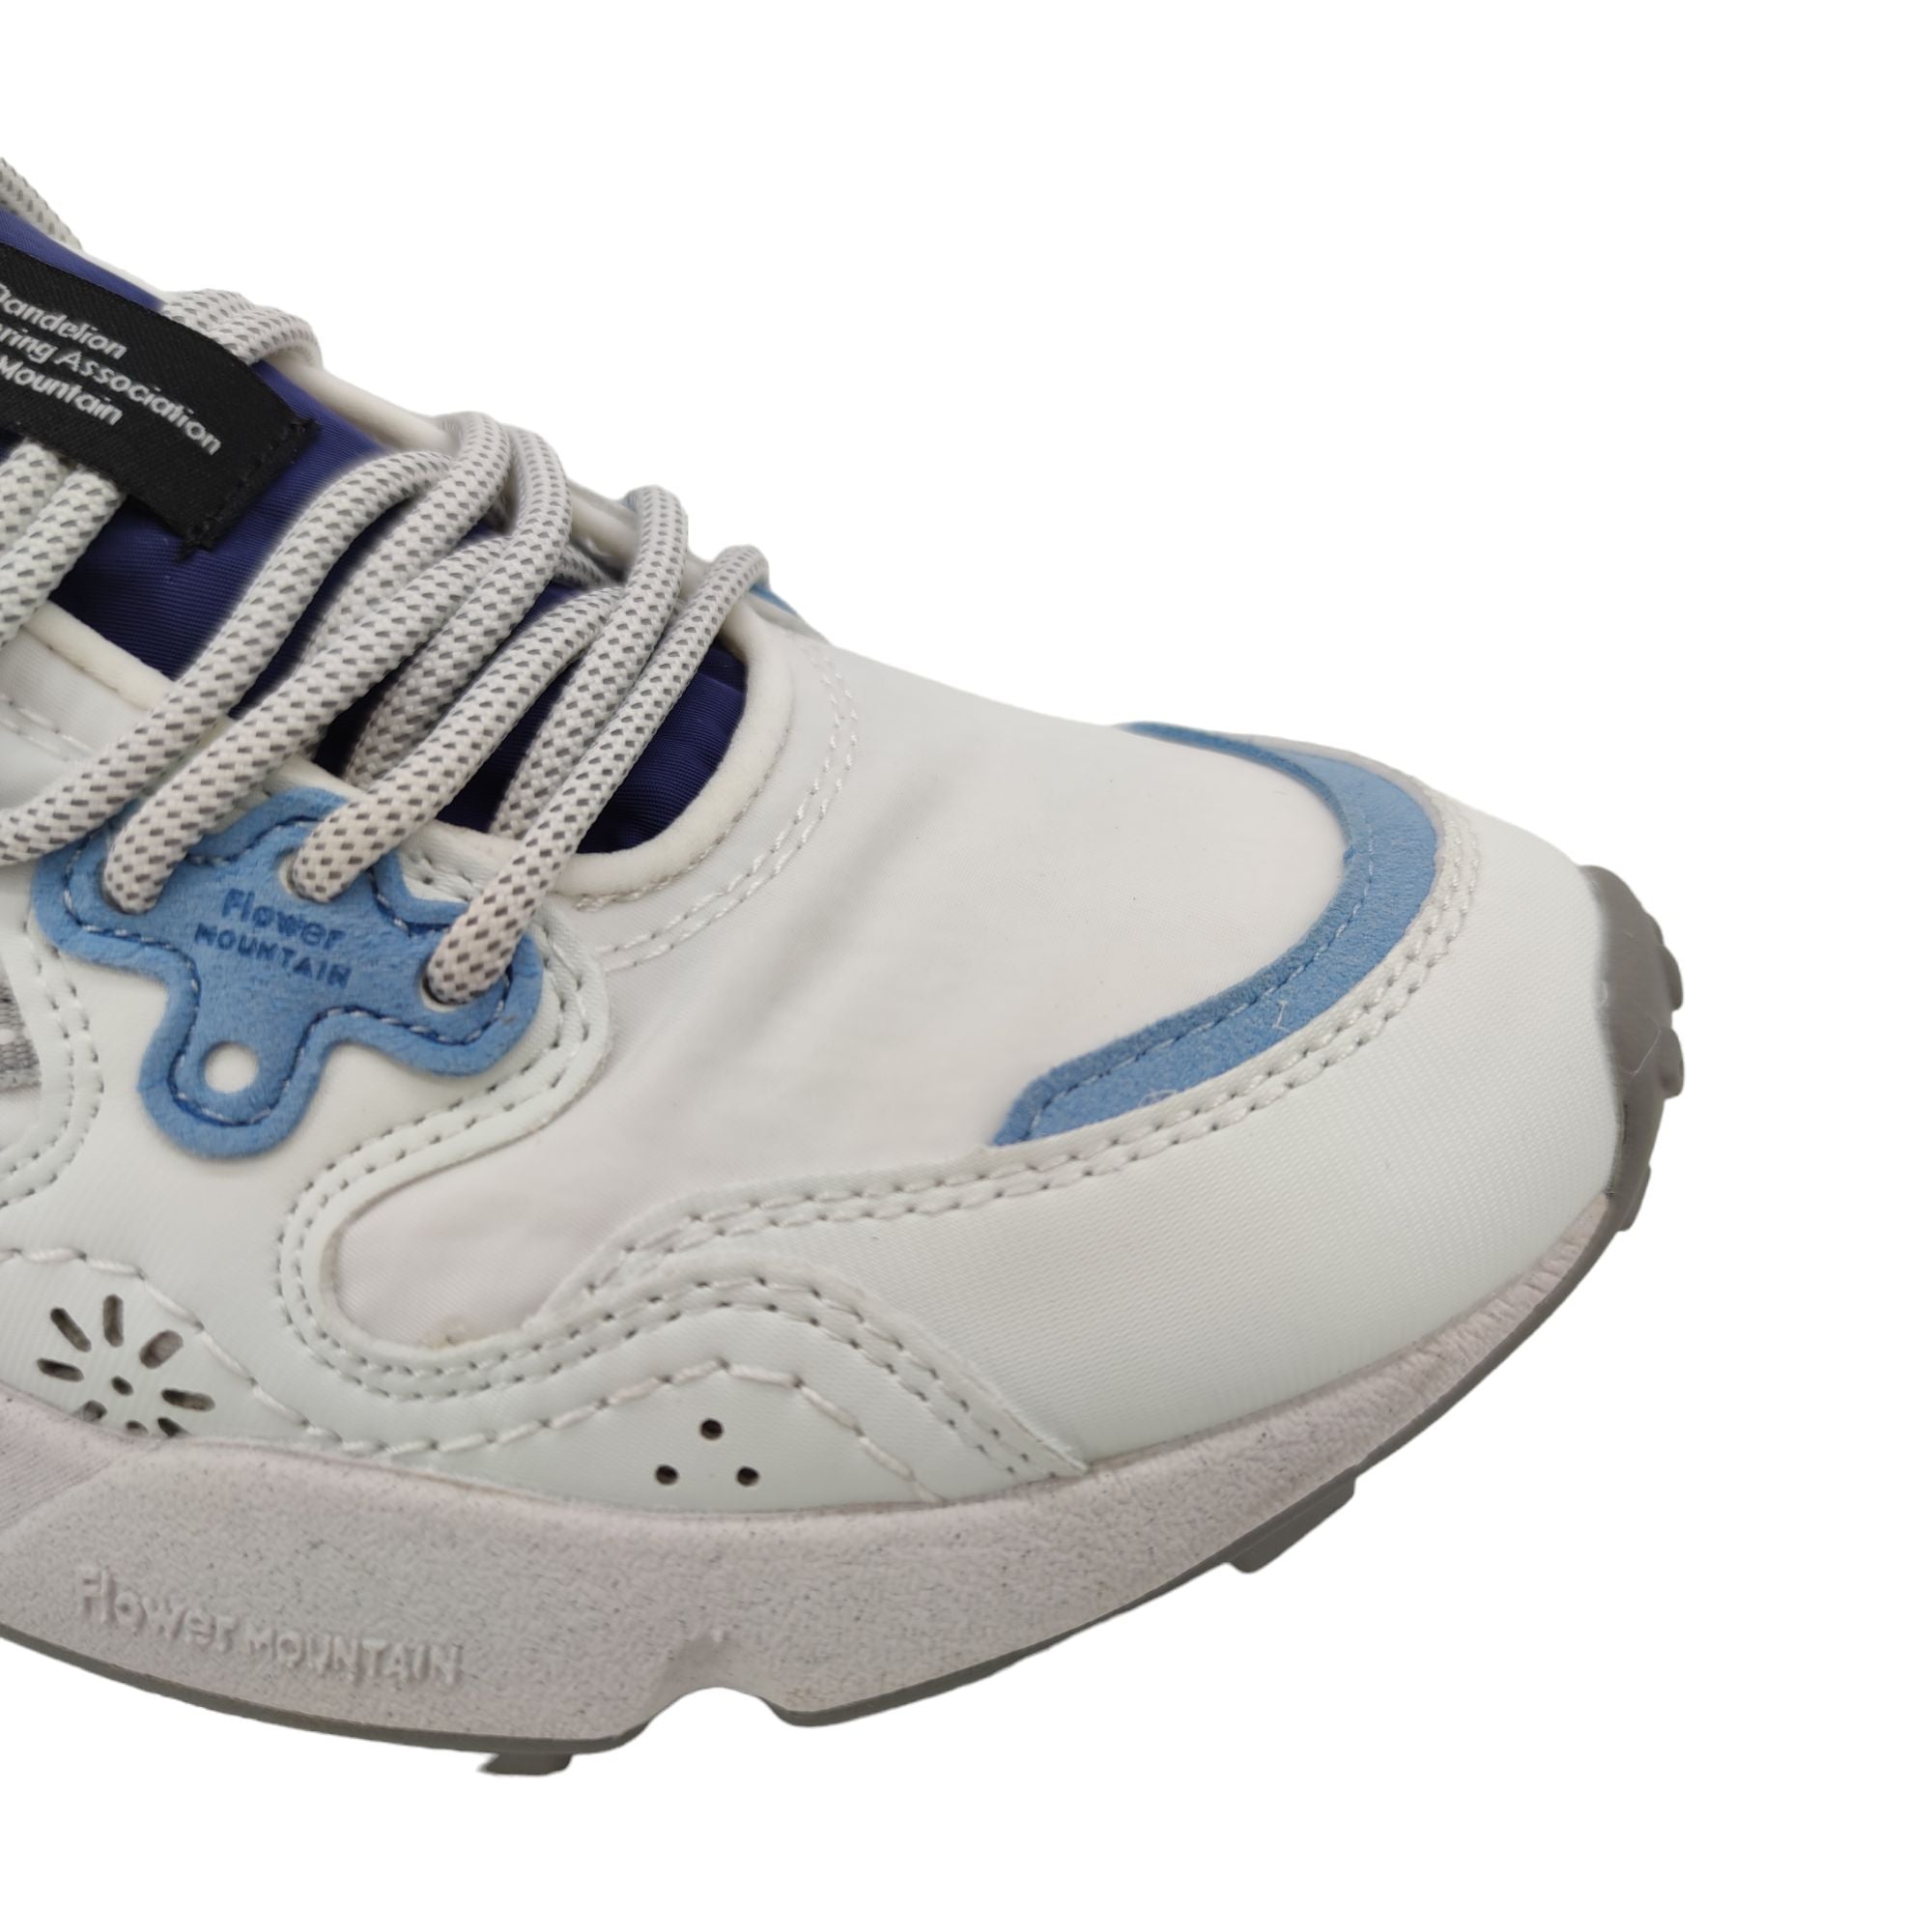 Yamano 3 Kaiso Shoes White/Grey/Navy 